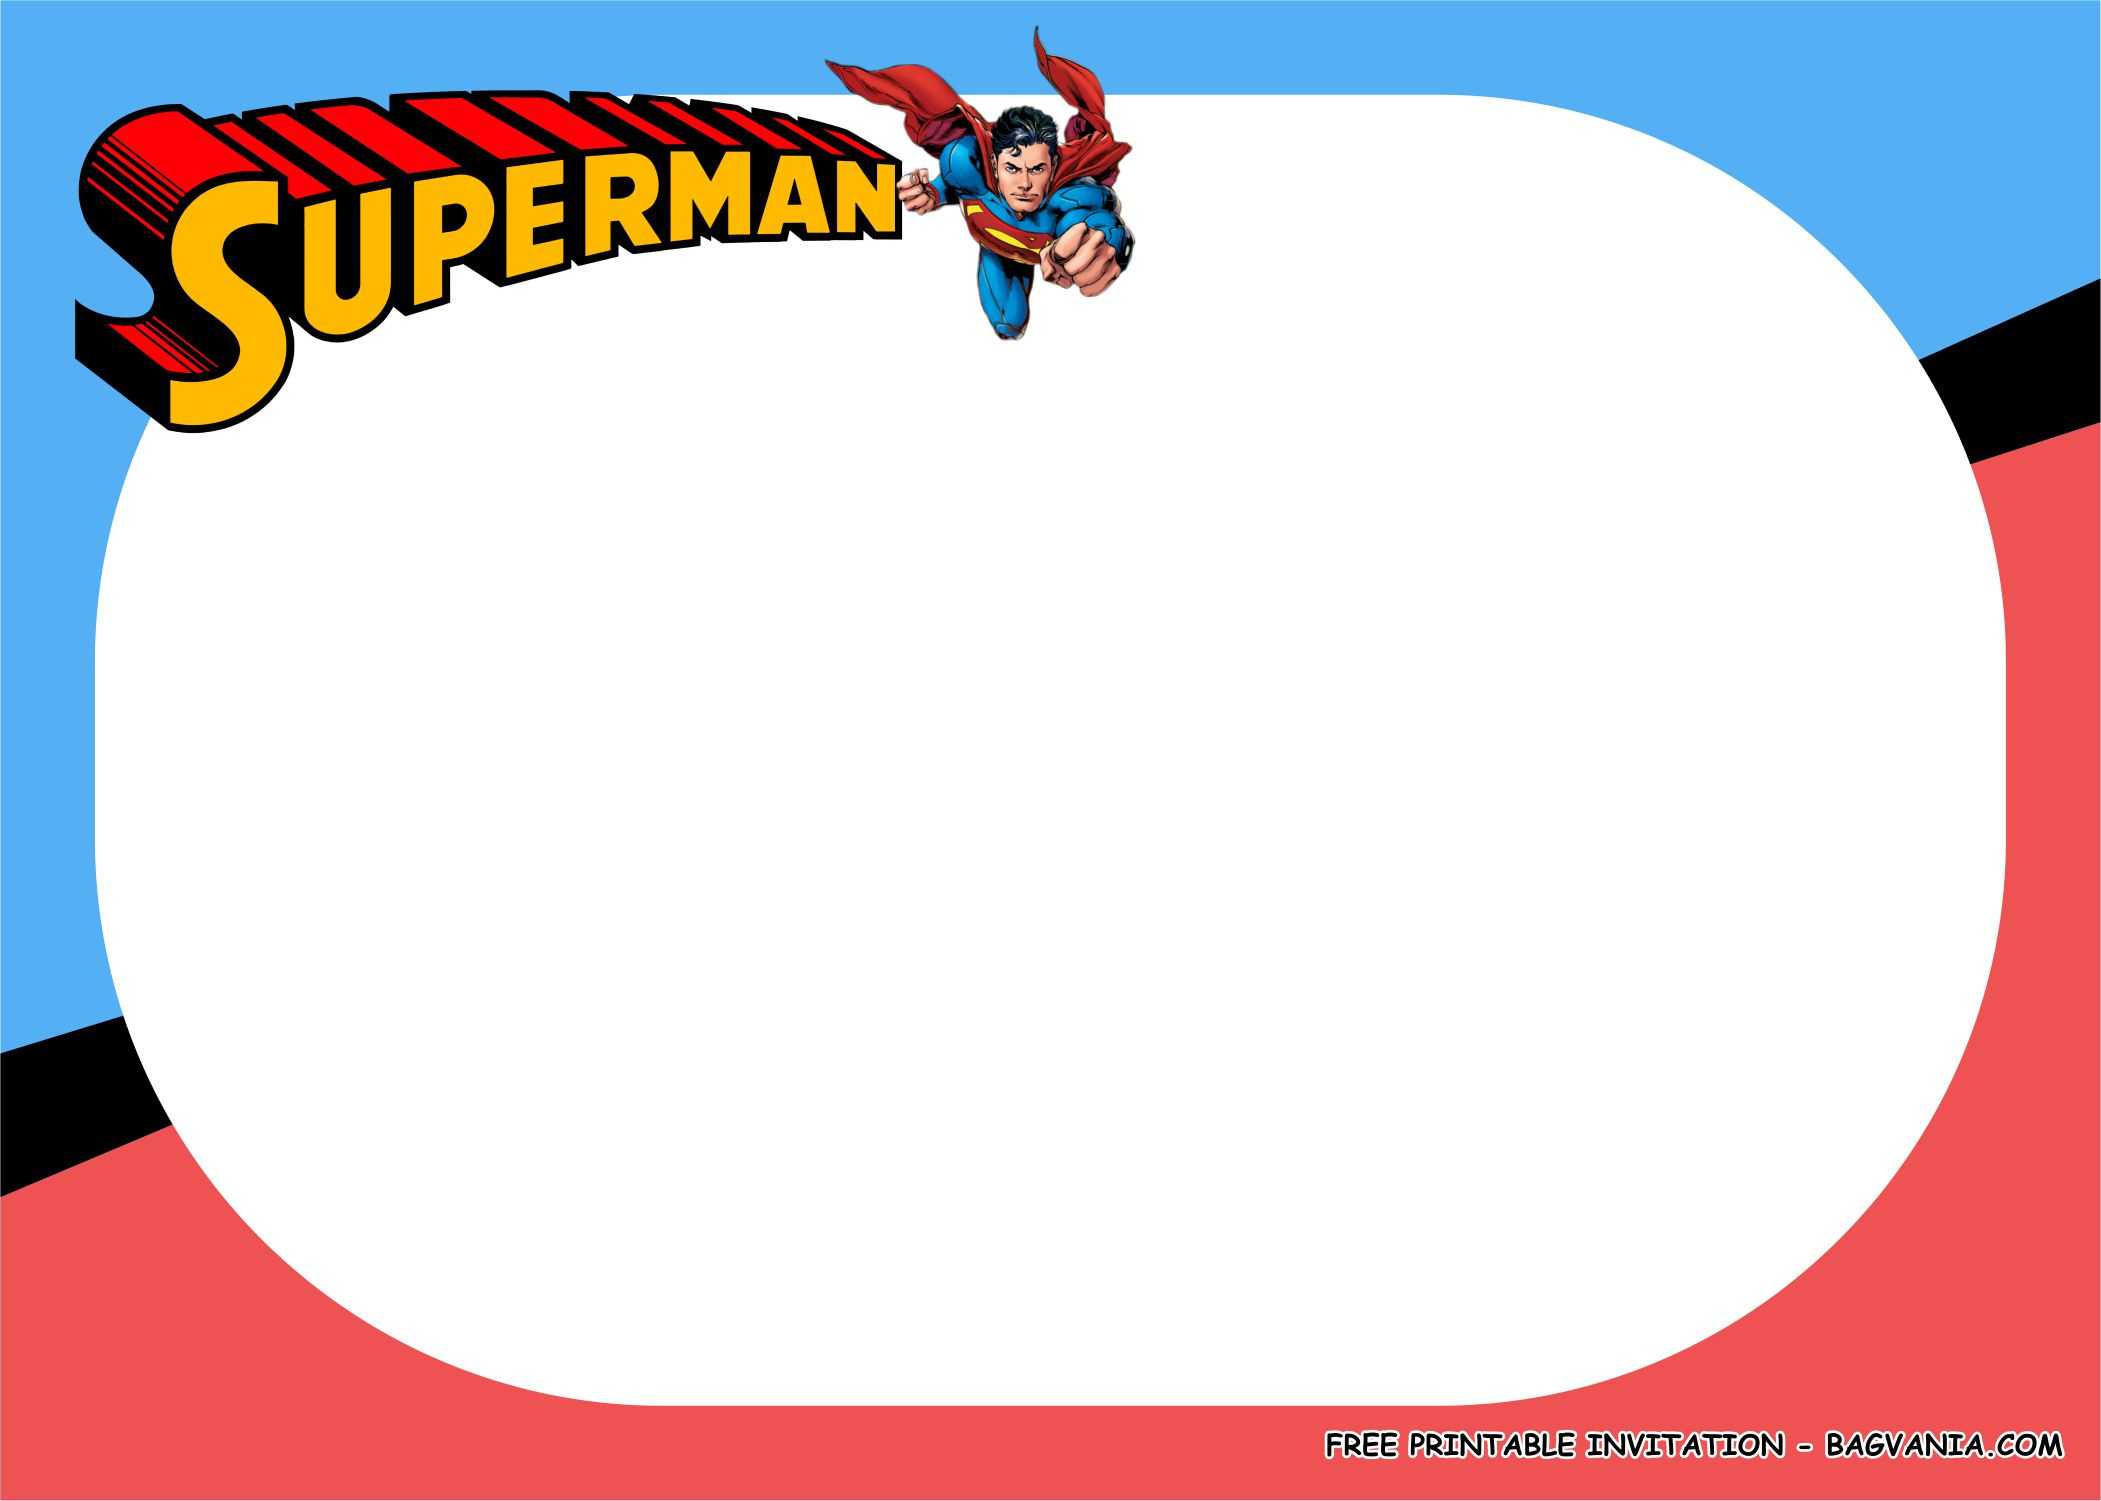 Free Printable) - Superman Birthday Party Kits Template With Regard To Superman Birthday Card Template